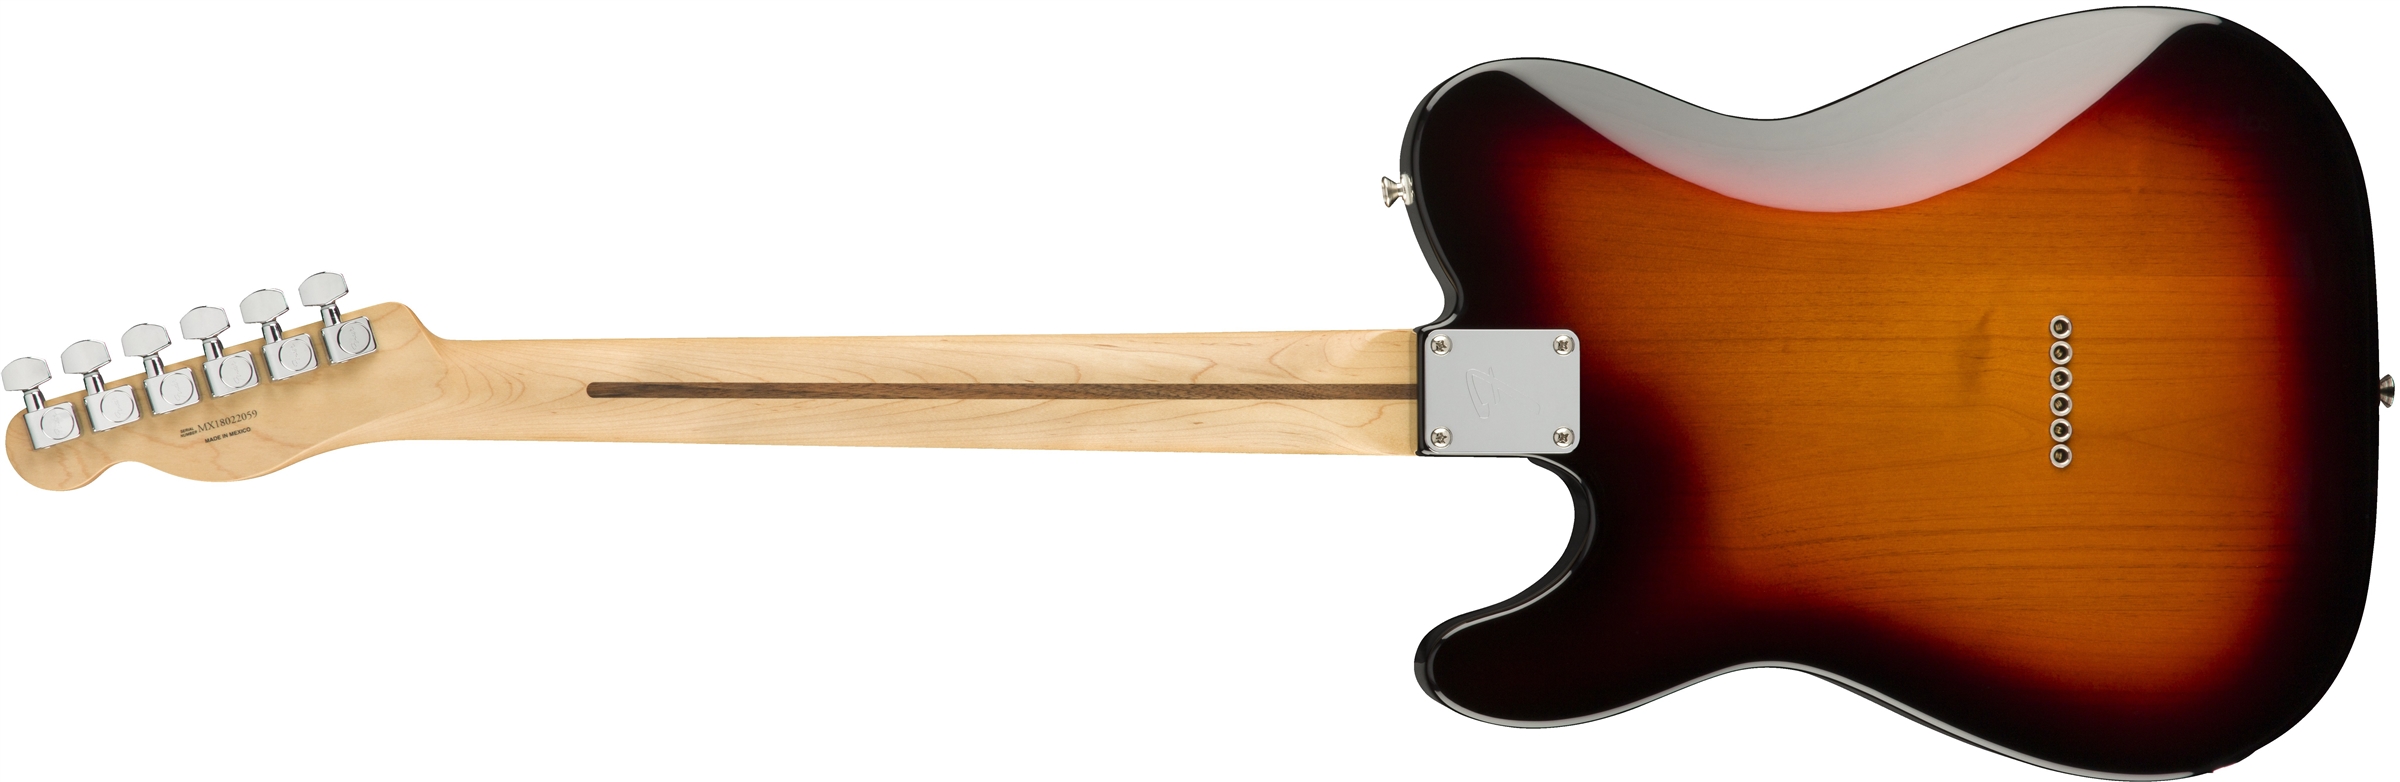 Fender Tele Player Mex Hh Pf - 3-color Sunburst - Tel shape electric guitar - Variation 1